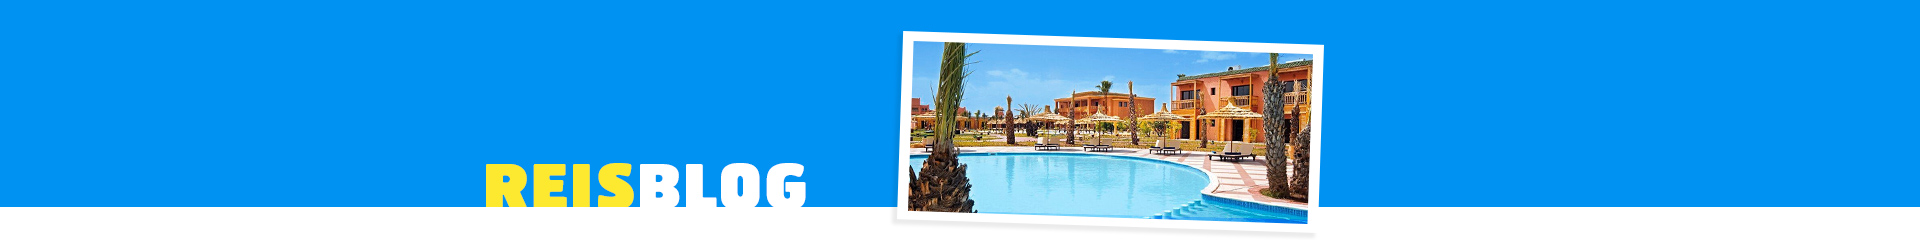 Beste all inclusive hotels in Marokko